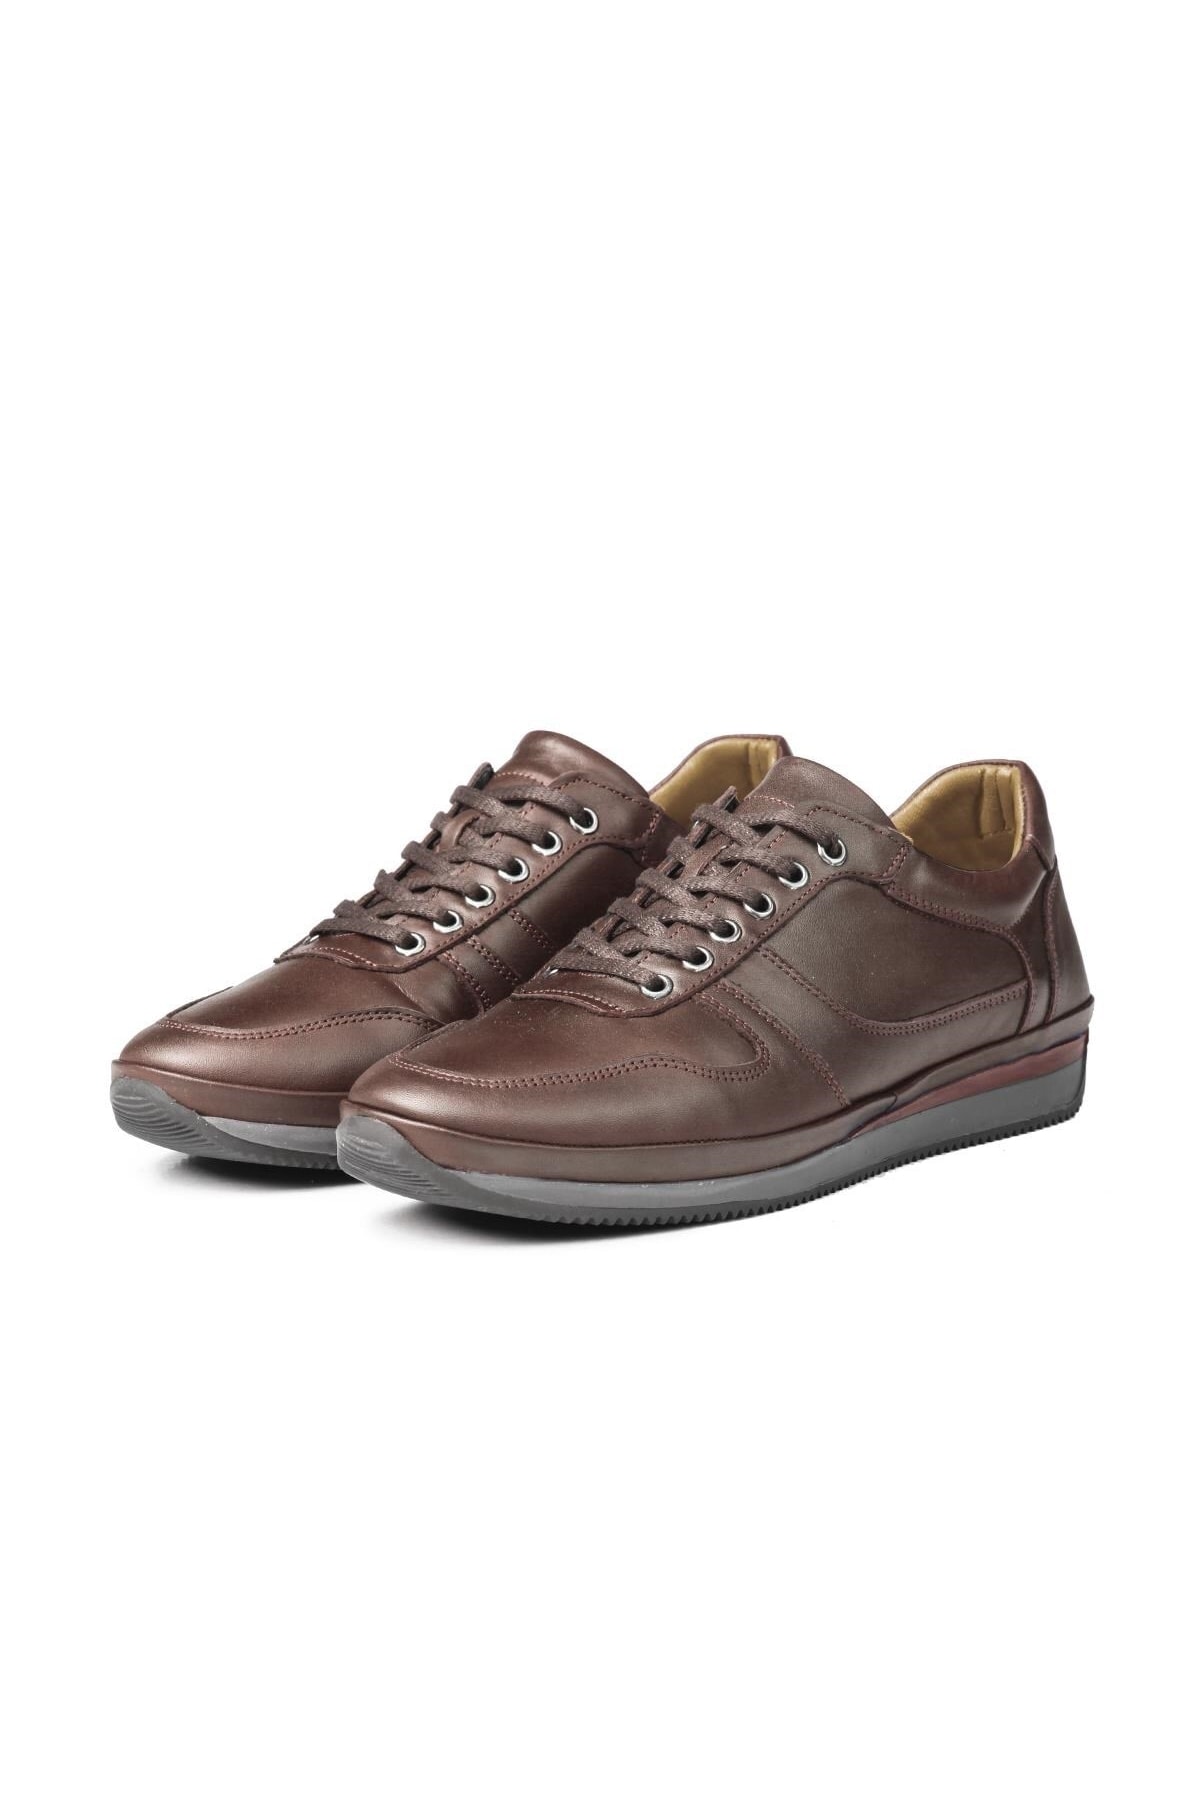 Levně Ducavelli Lion Men's Genuine Leather Plush Shearling Casual Shoes Brown.